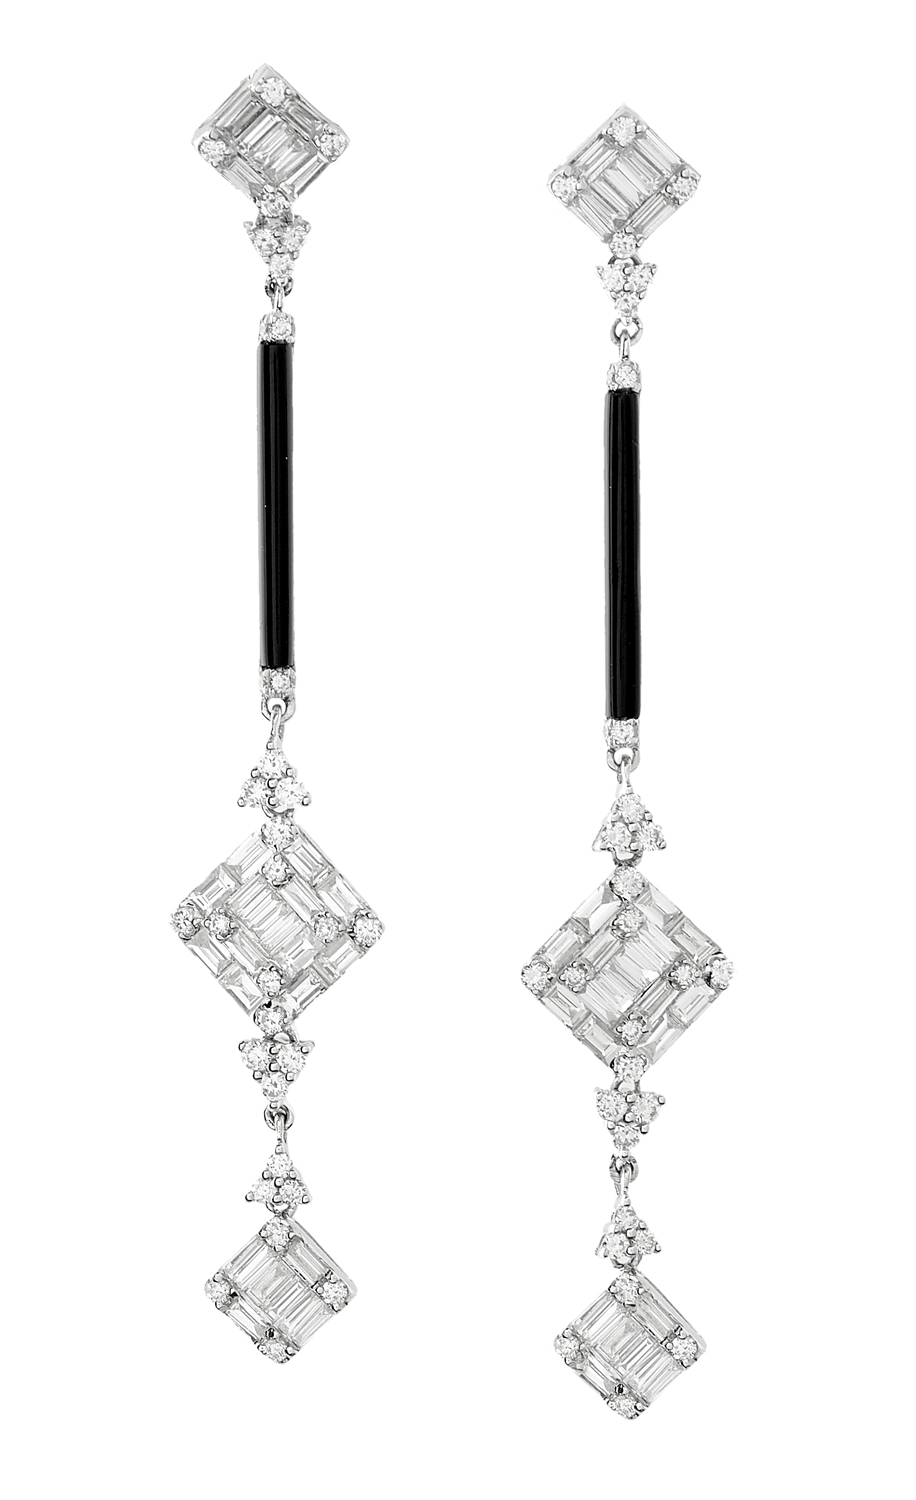 Pair of Diamond Dangle Earrings